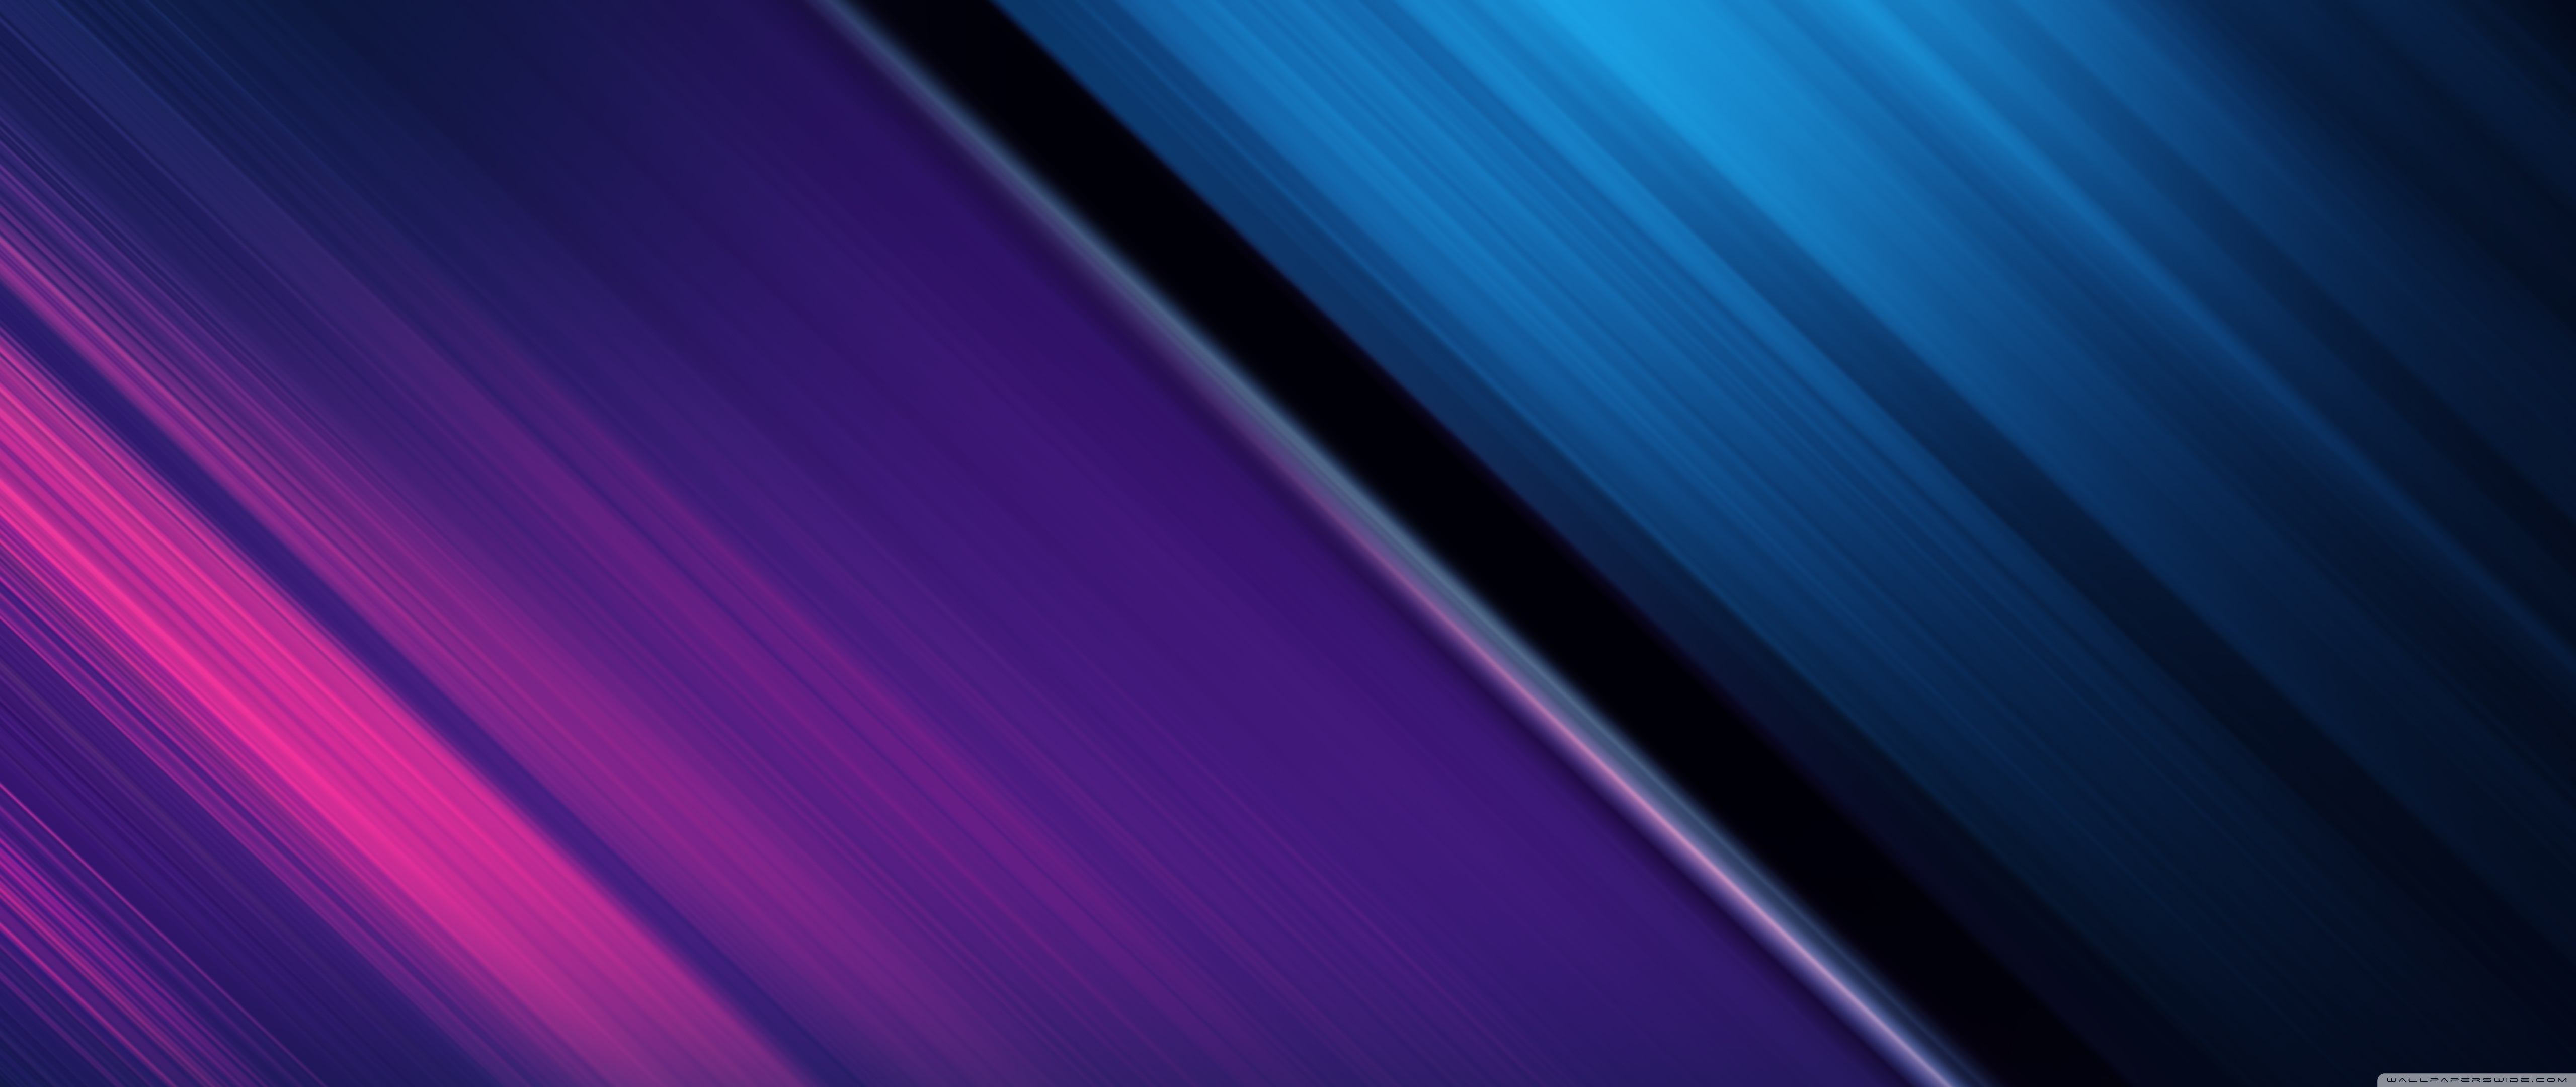 Fomef Colorful Bluemix 5k Ultra HD Desktop Background Wallpaper